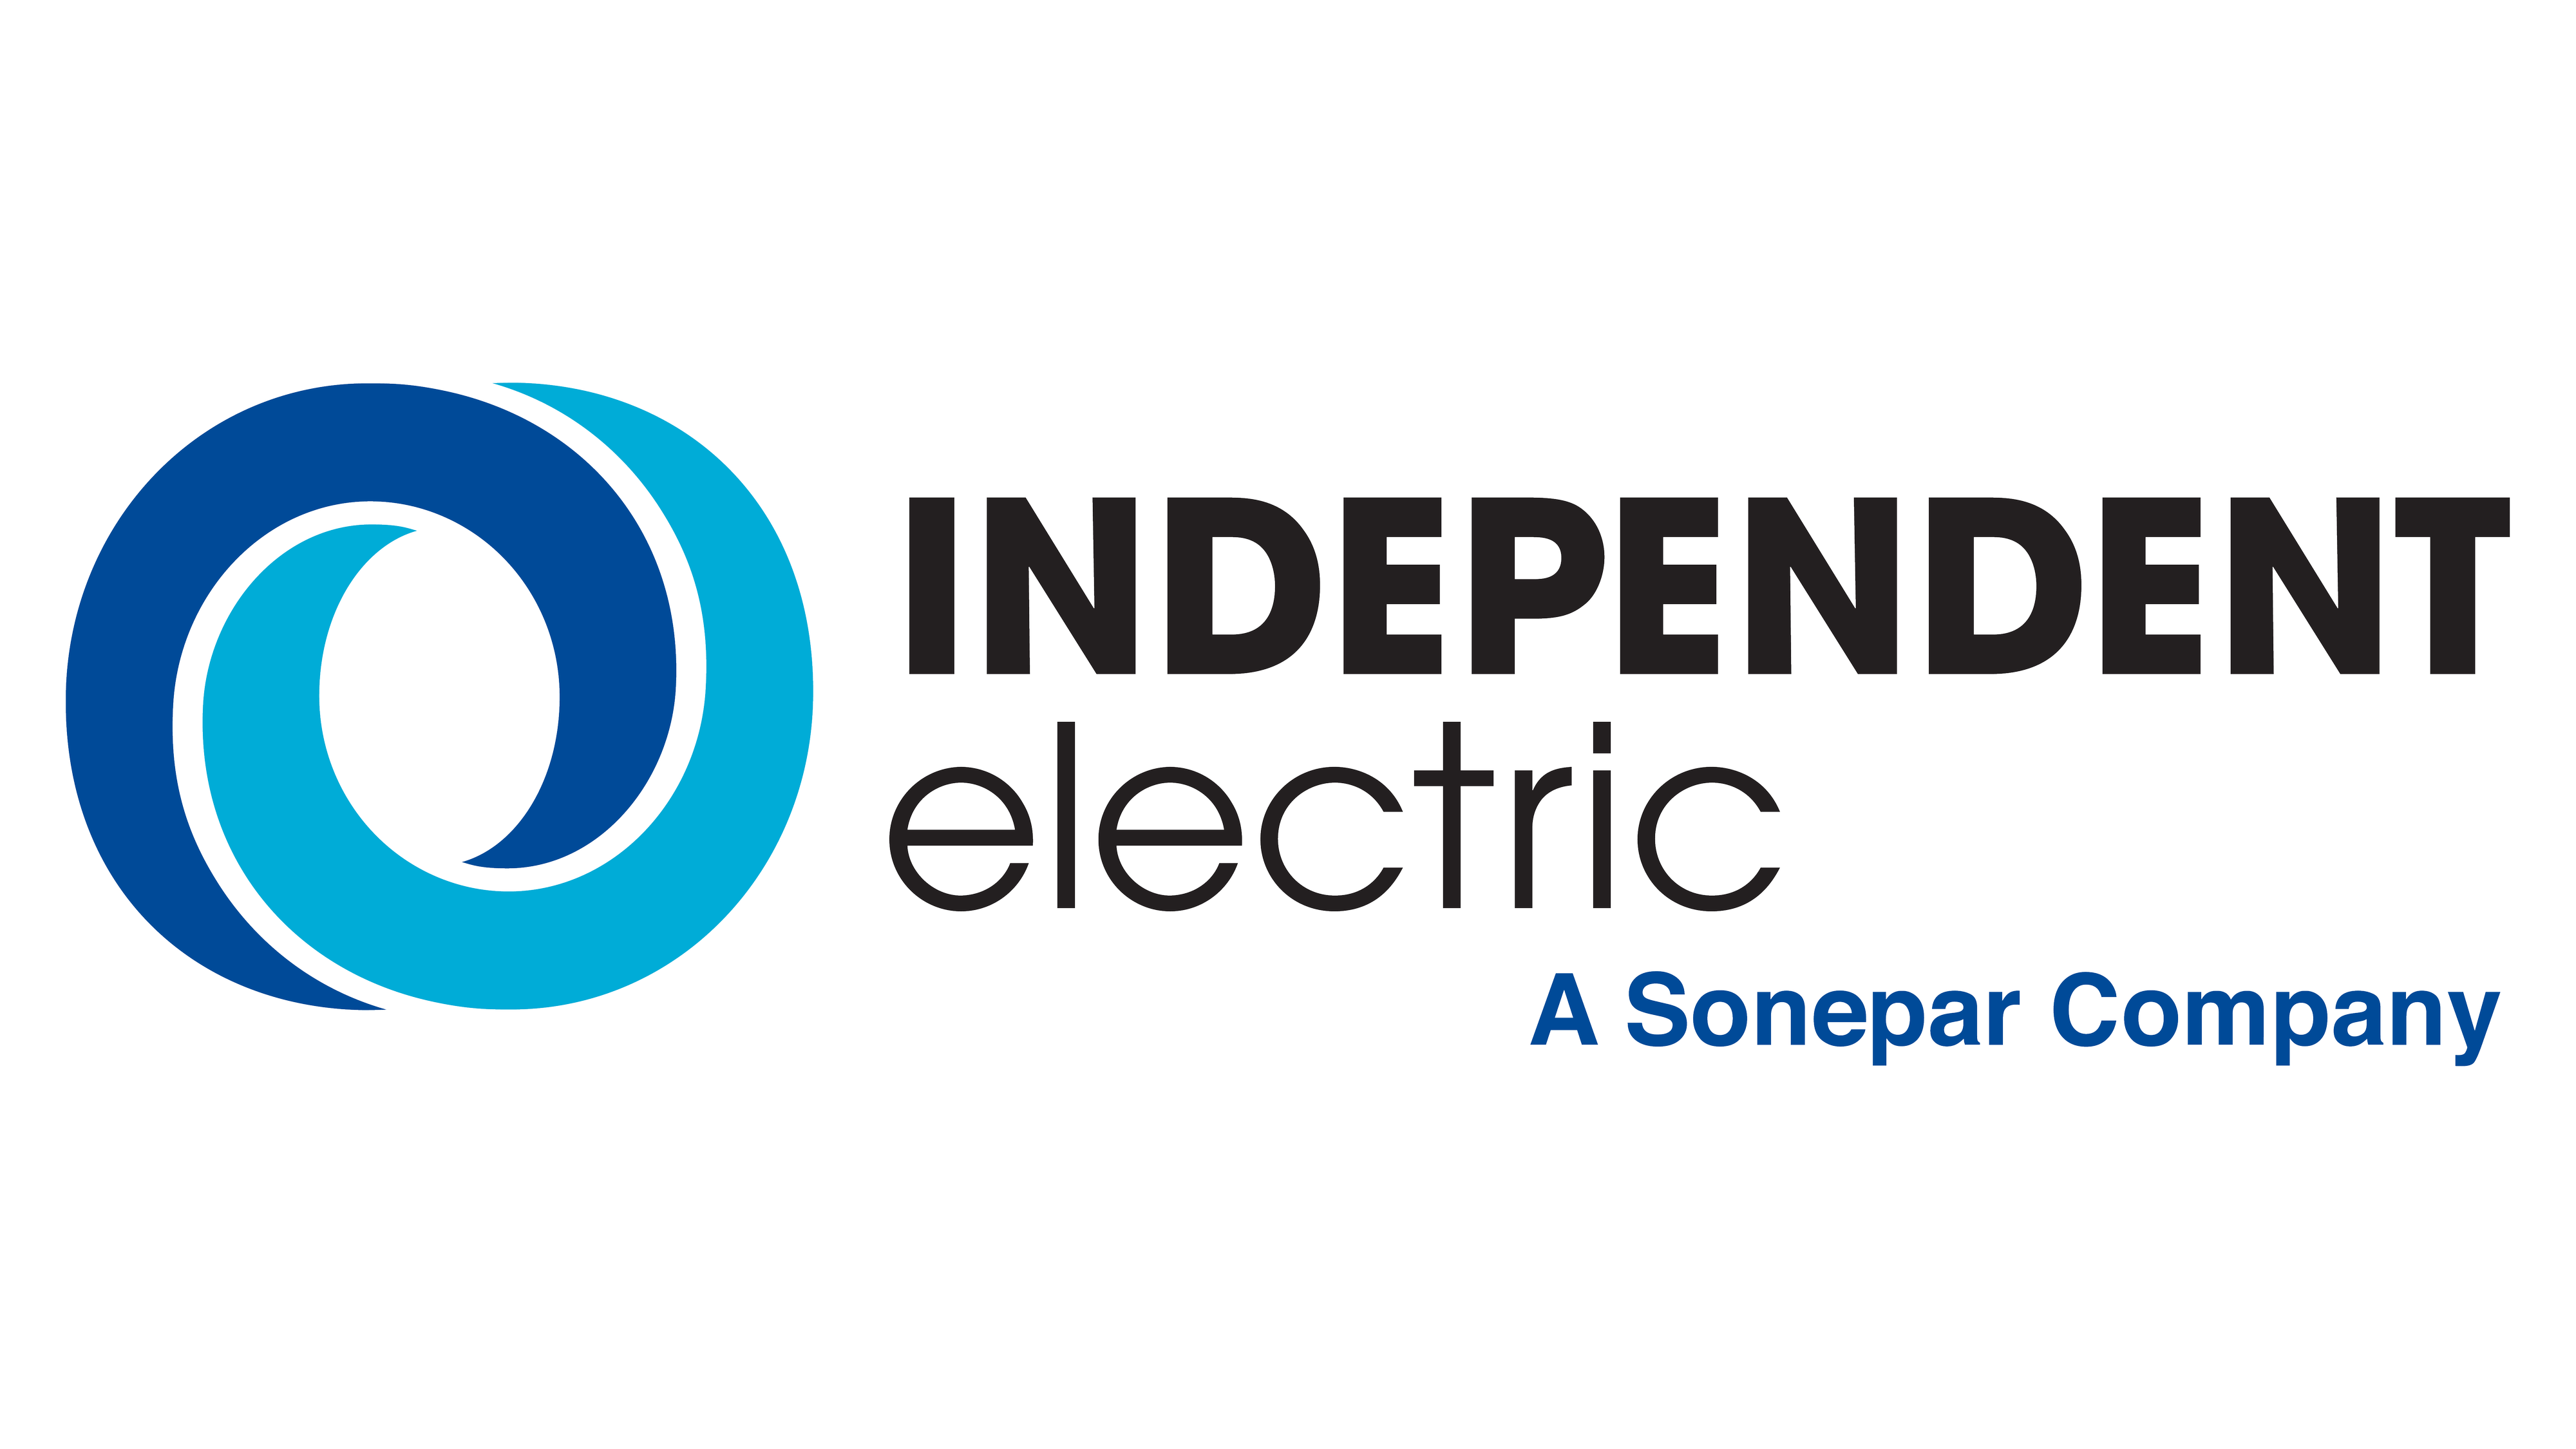 Independent Logo